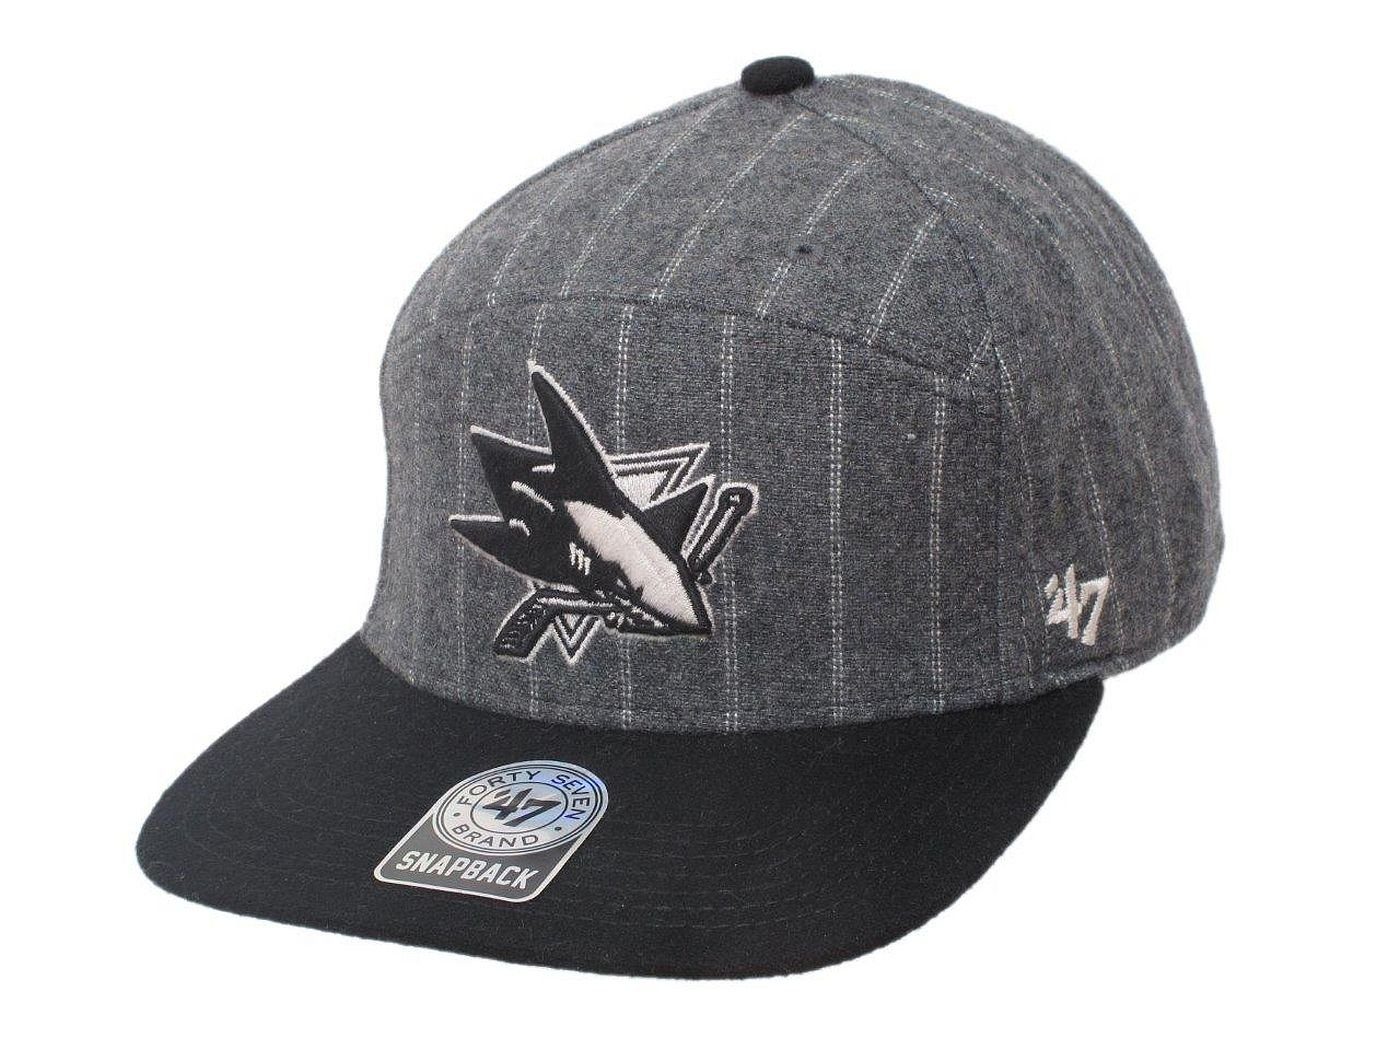 "San Baseball - Sharks" Brand 47 Kappe Cap Mütze Cap NHL Jose Eishockey Basecap '47 Brand